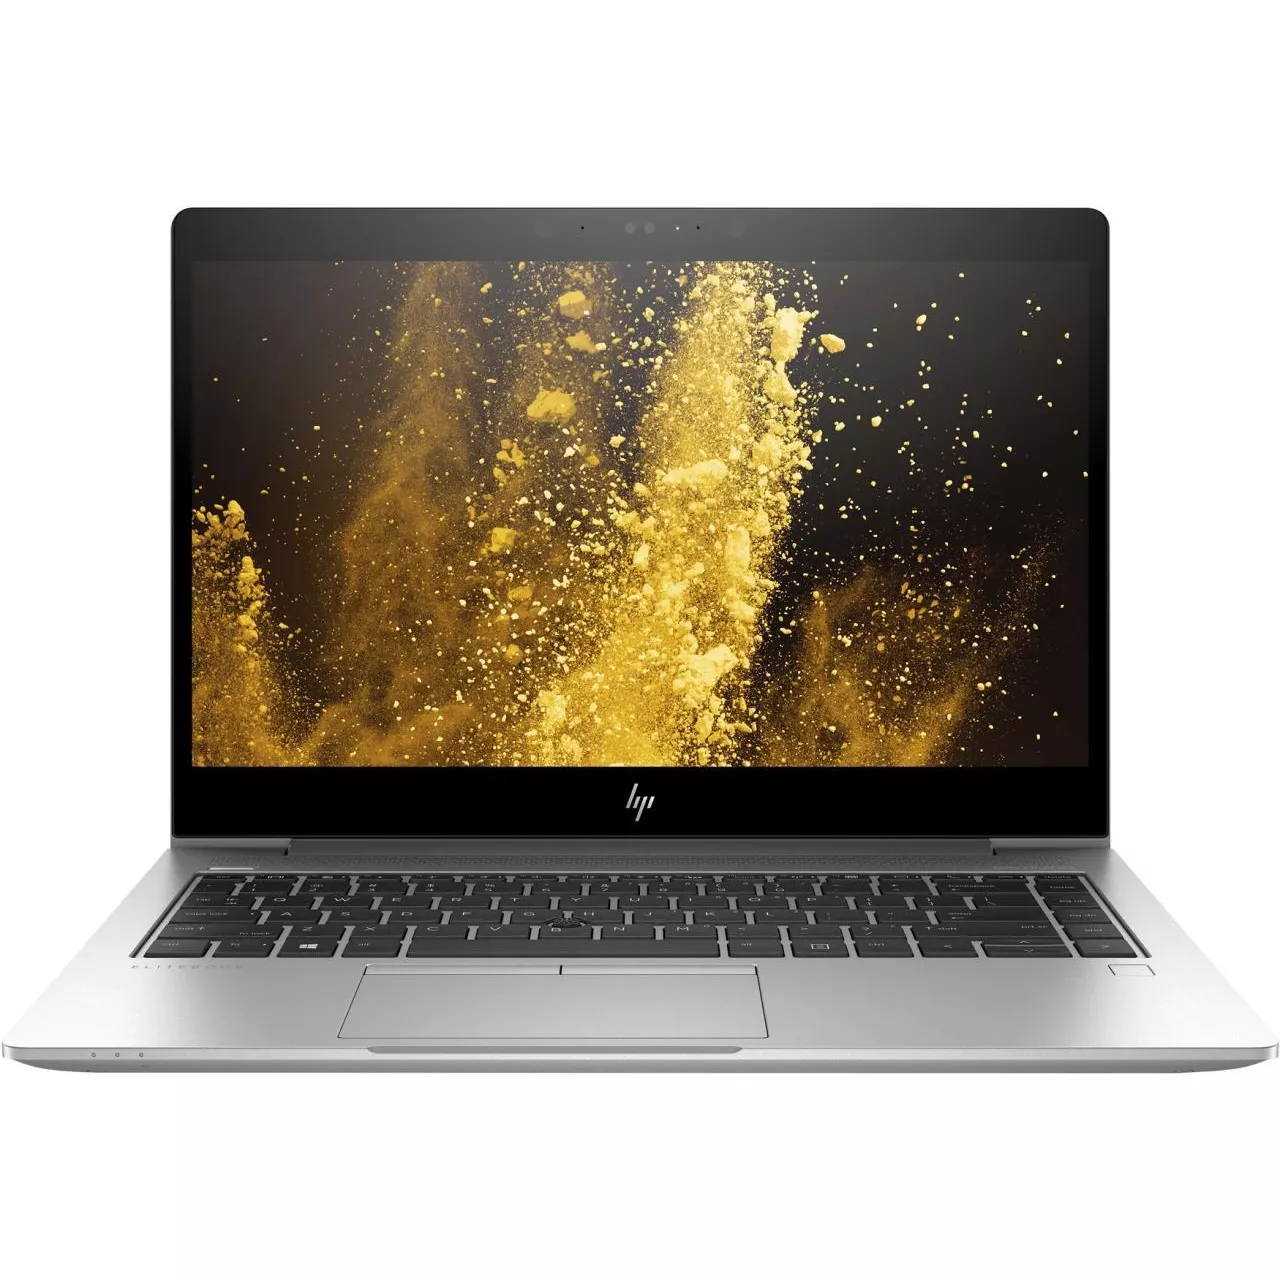 HP EliteBook 840 G5 | Intel Core i5-8250U | 256GB SSD | 8GB ОЗУ | 14" Full HD (1920x1080) | WIN10 | Б/У | Состояние: 4+